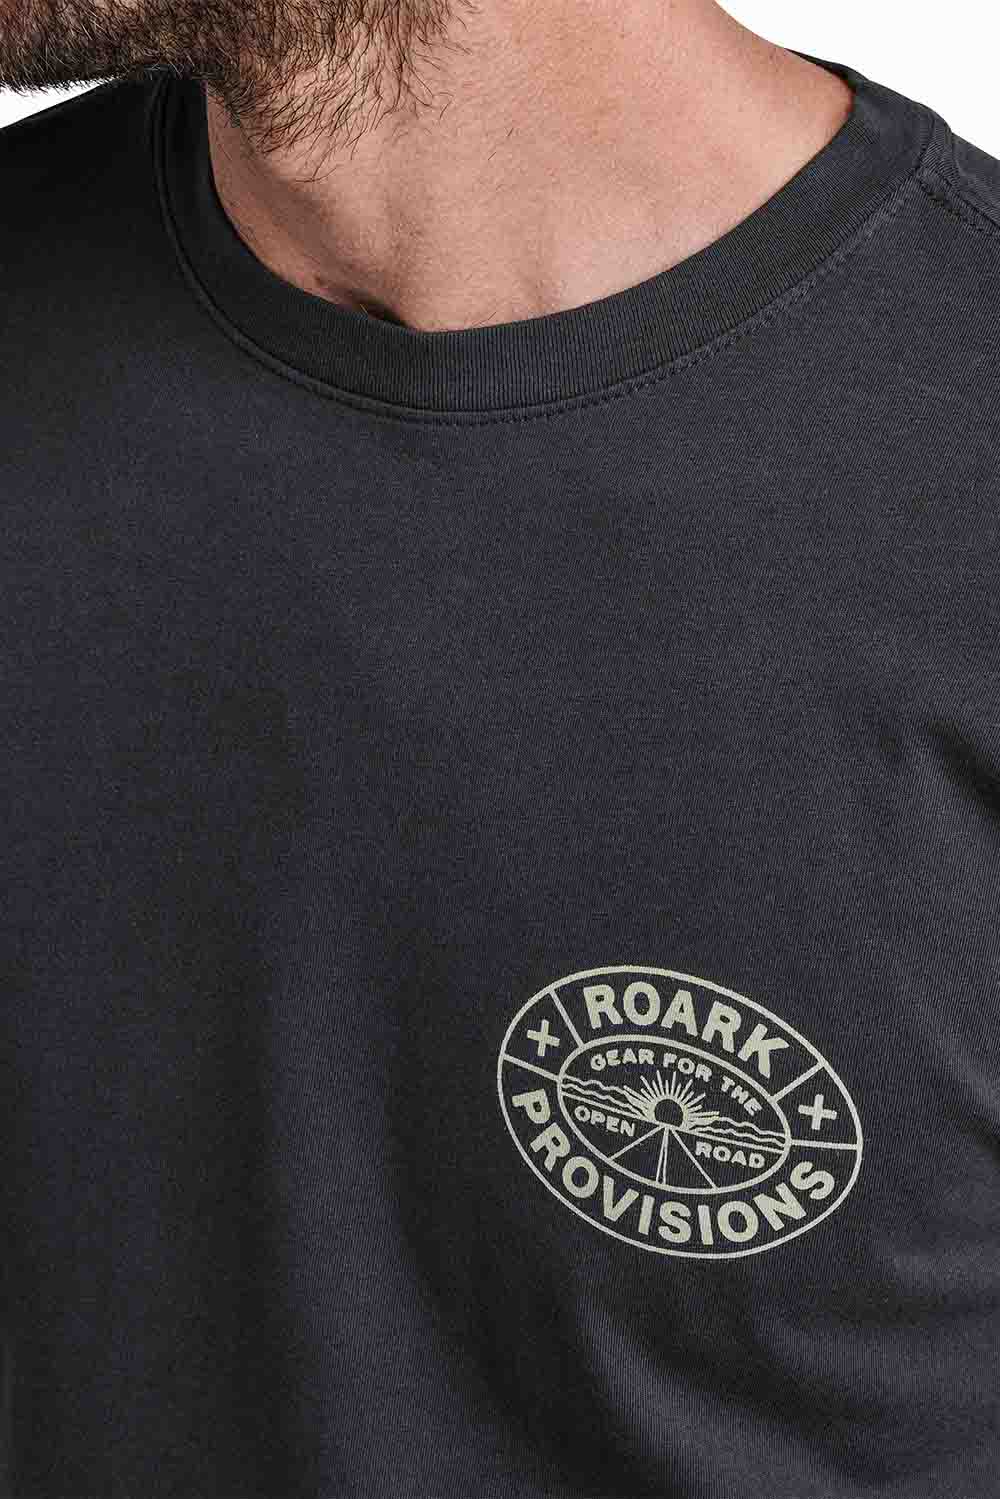 Roark - Provisions - Black - Detail